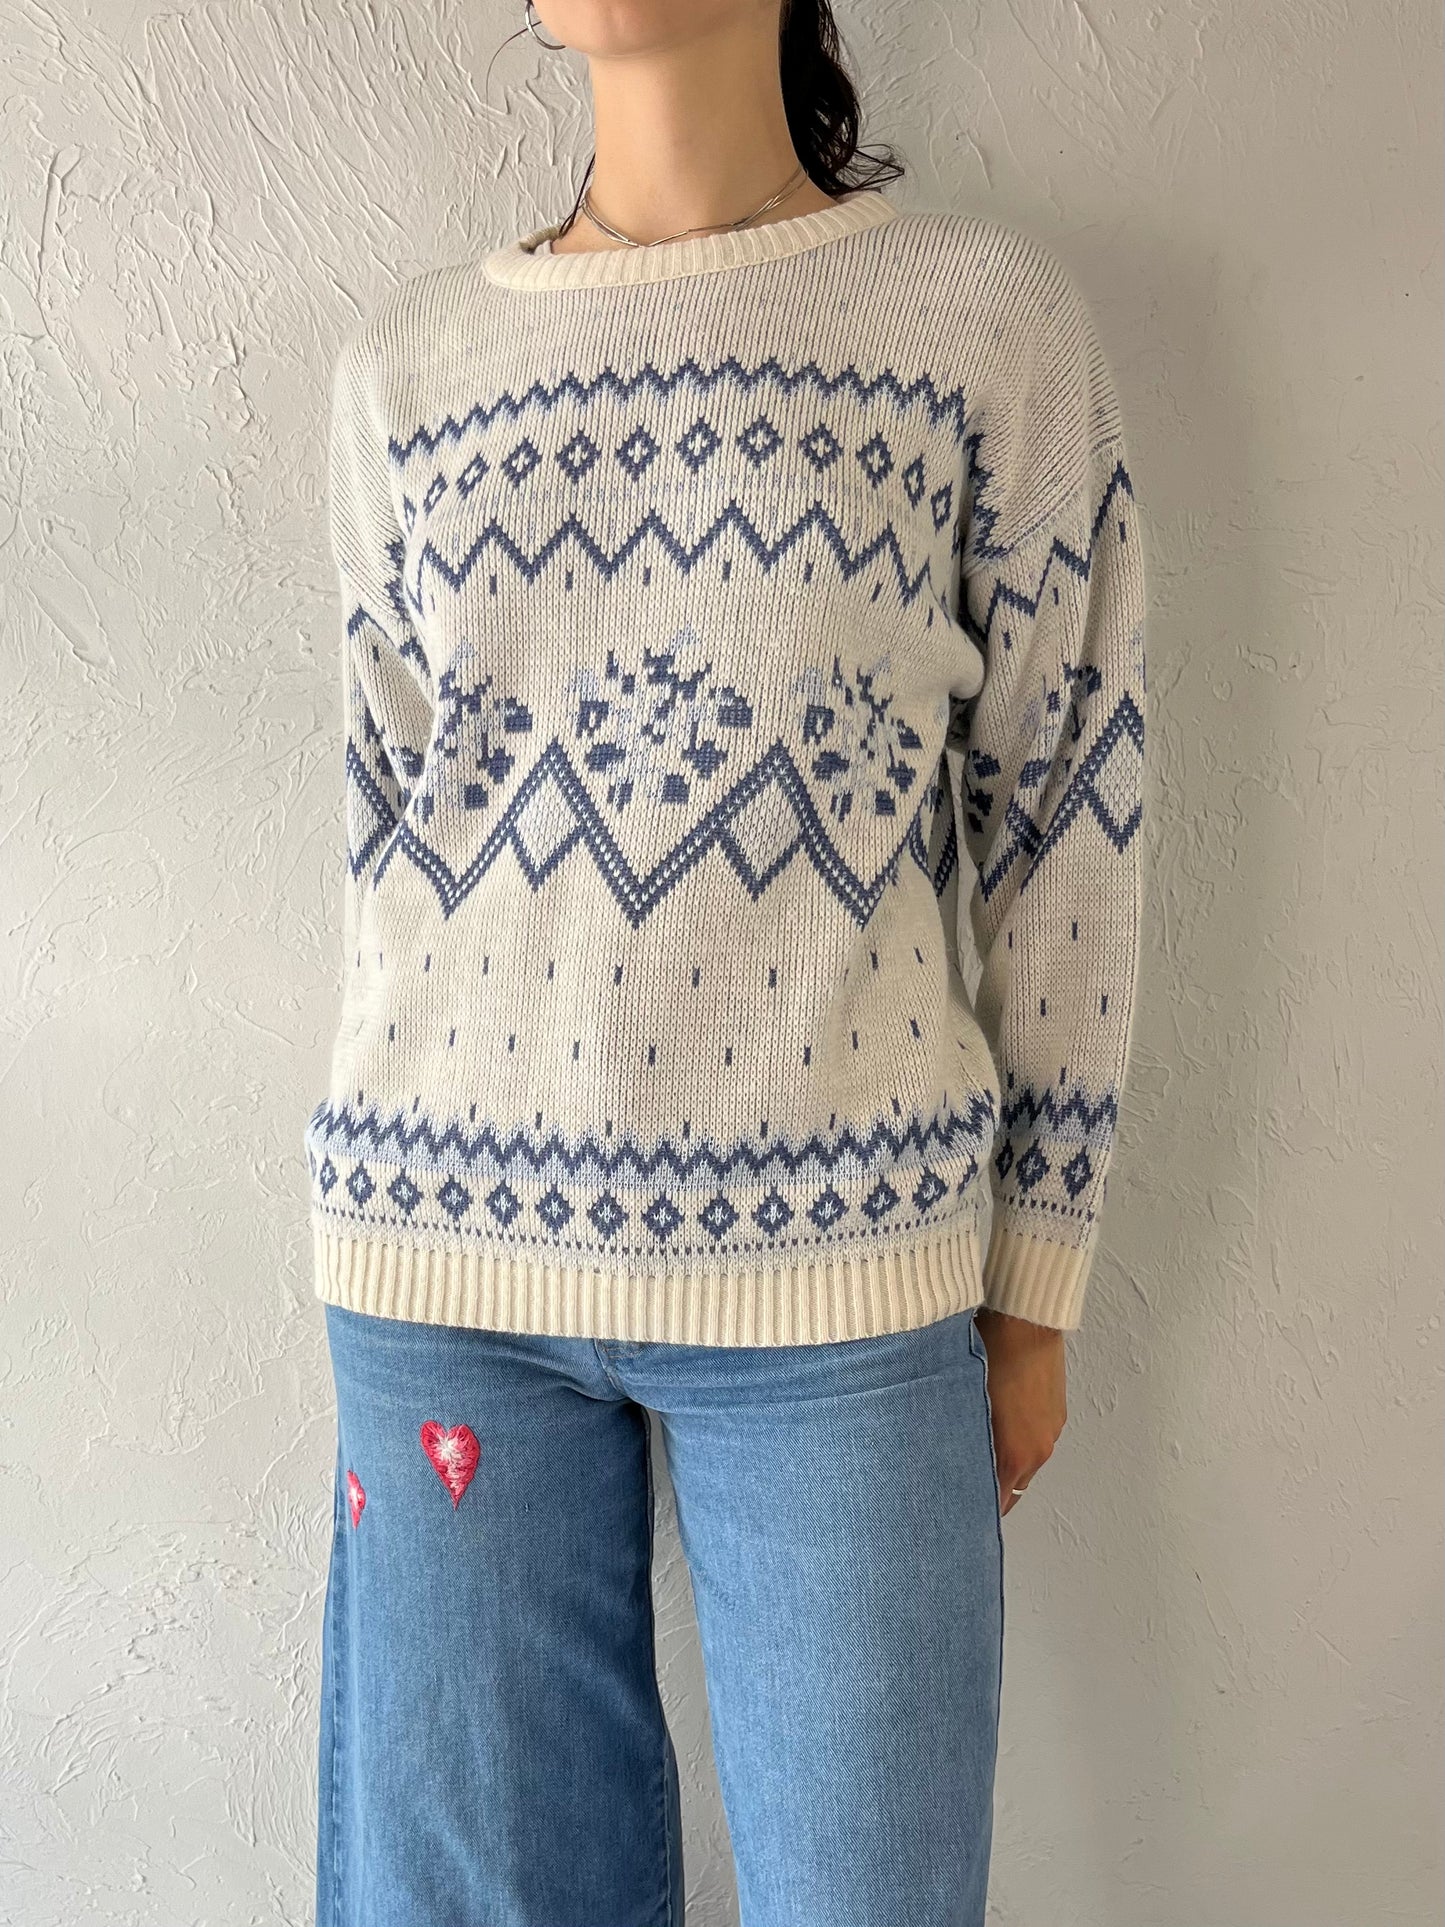 90s Blue and White Knit Ski Sweater / Medium